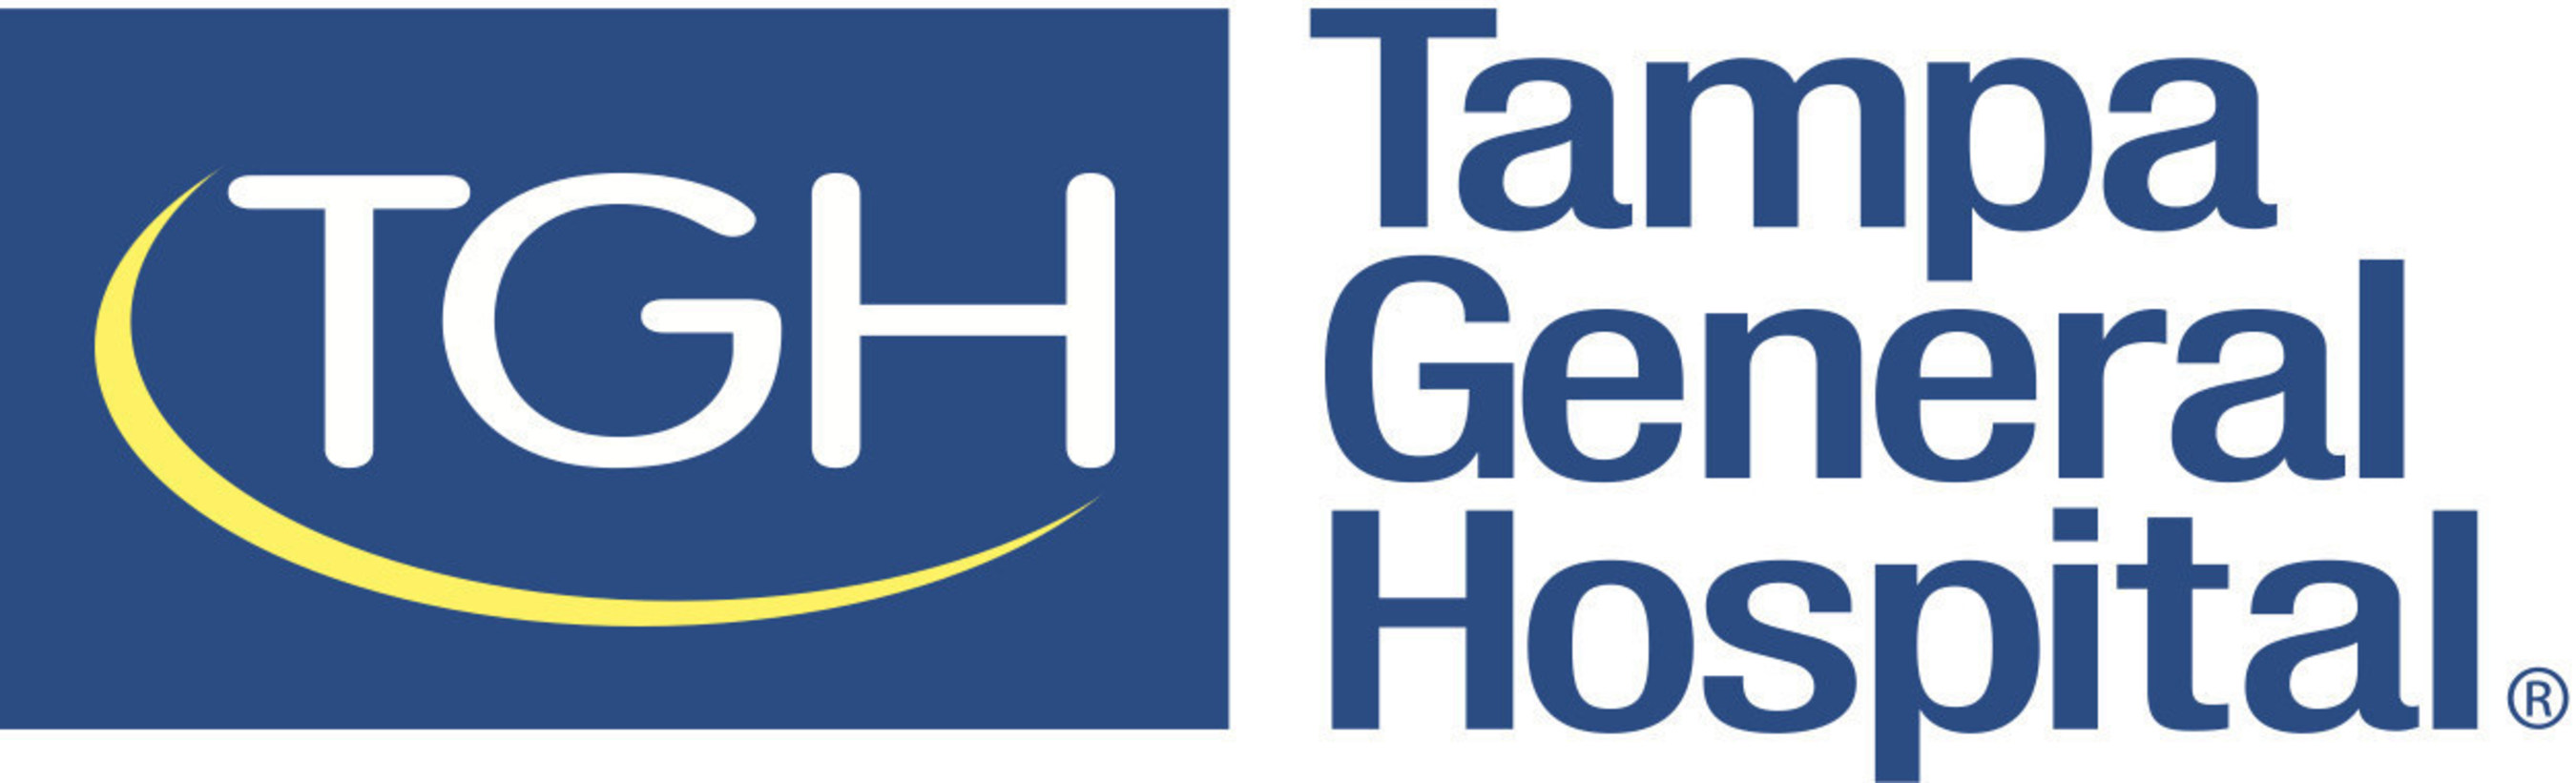 Tampa General Hospital logo.